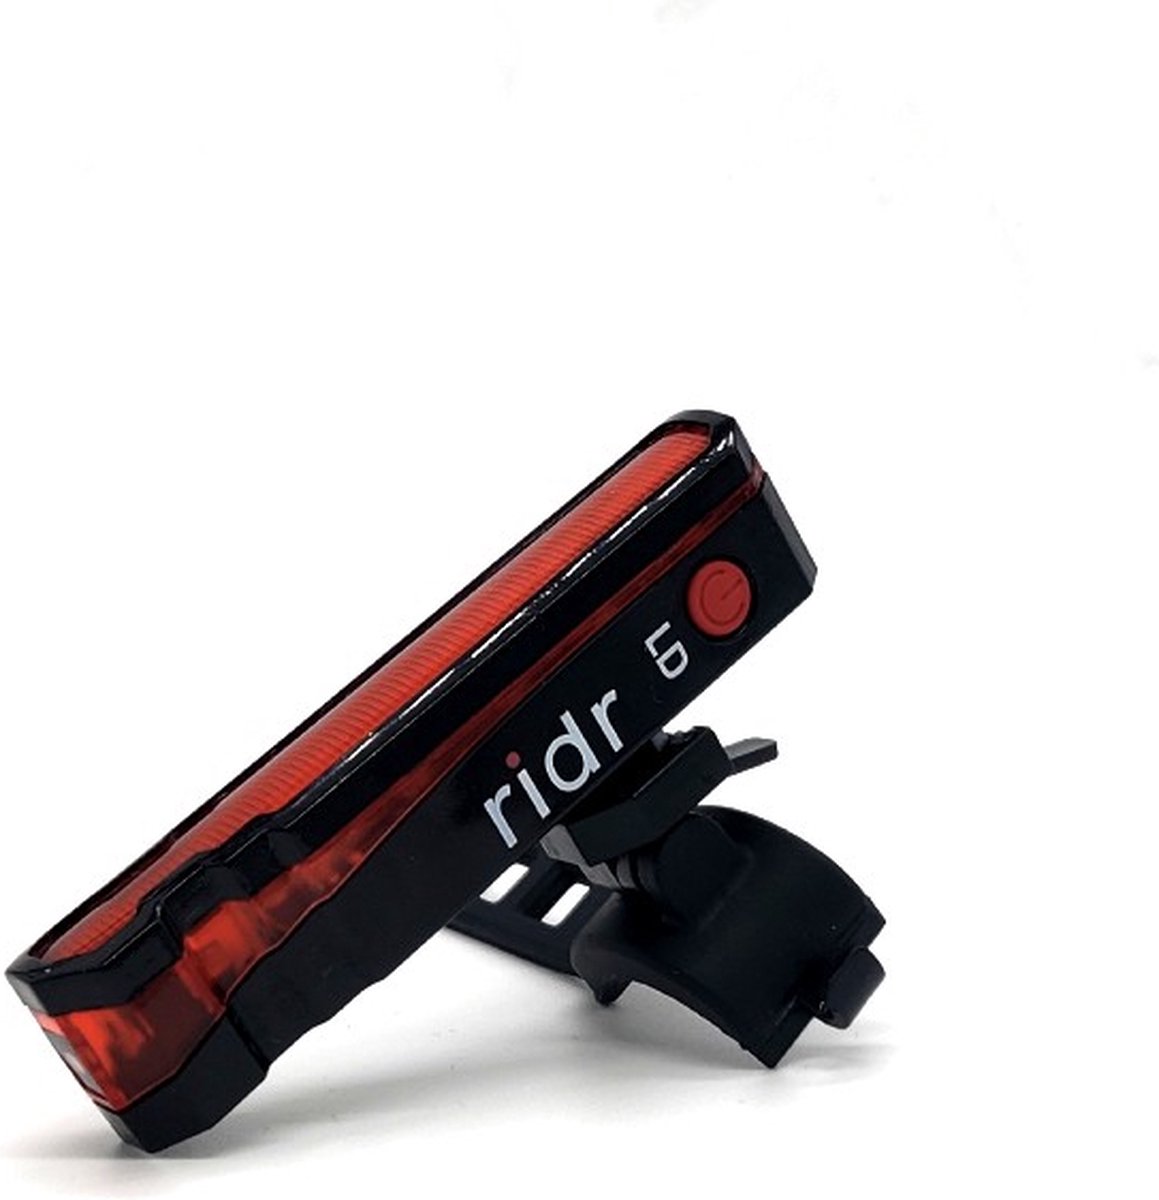 RIDR Achterlicht fiets - USB oplaadbaar LED - fietsverlichting met laser - waterdicht